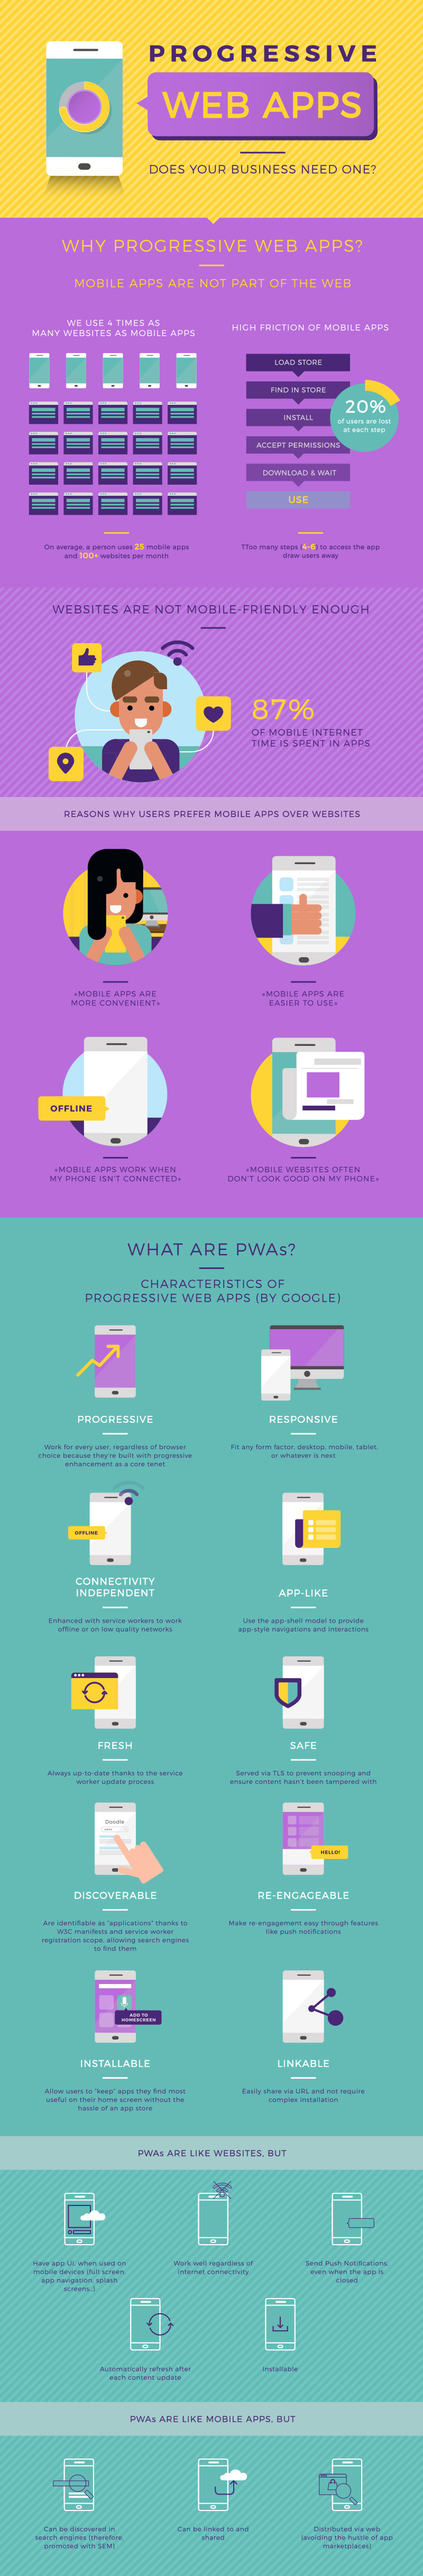 progressive-web-apps-infographic-part-1